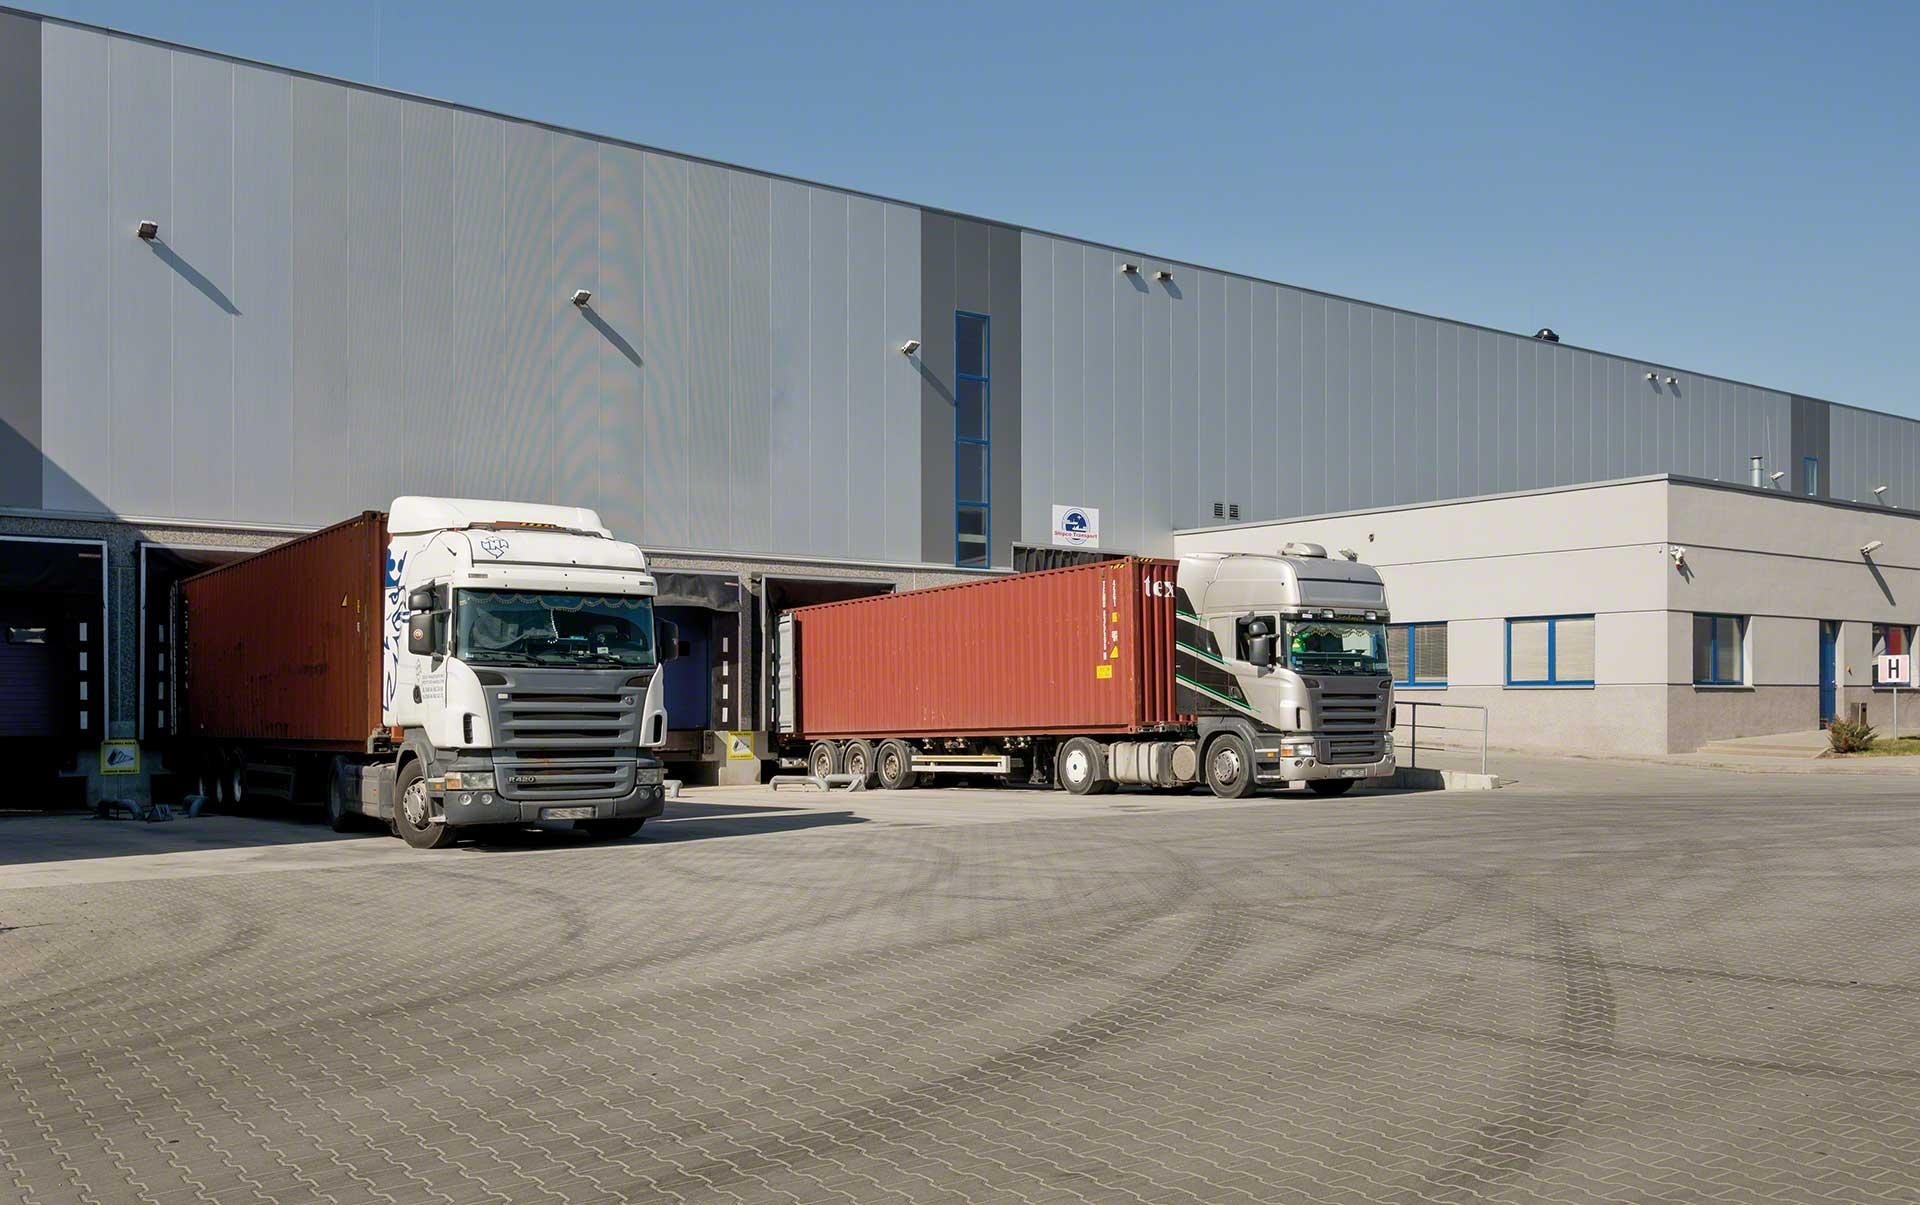 Trucks loading and unloading goods at the warehouse docks